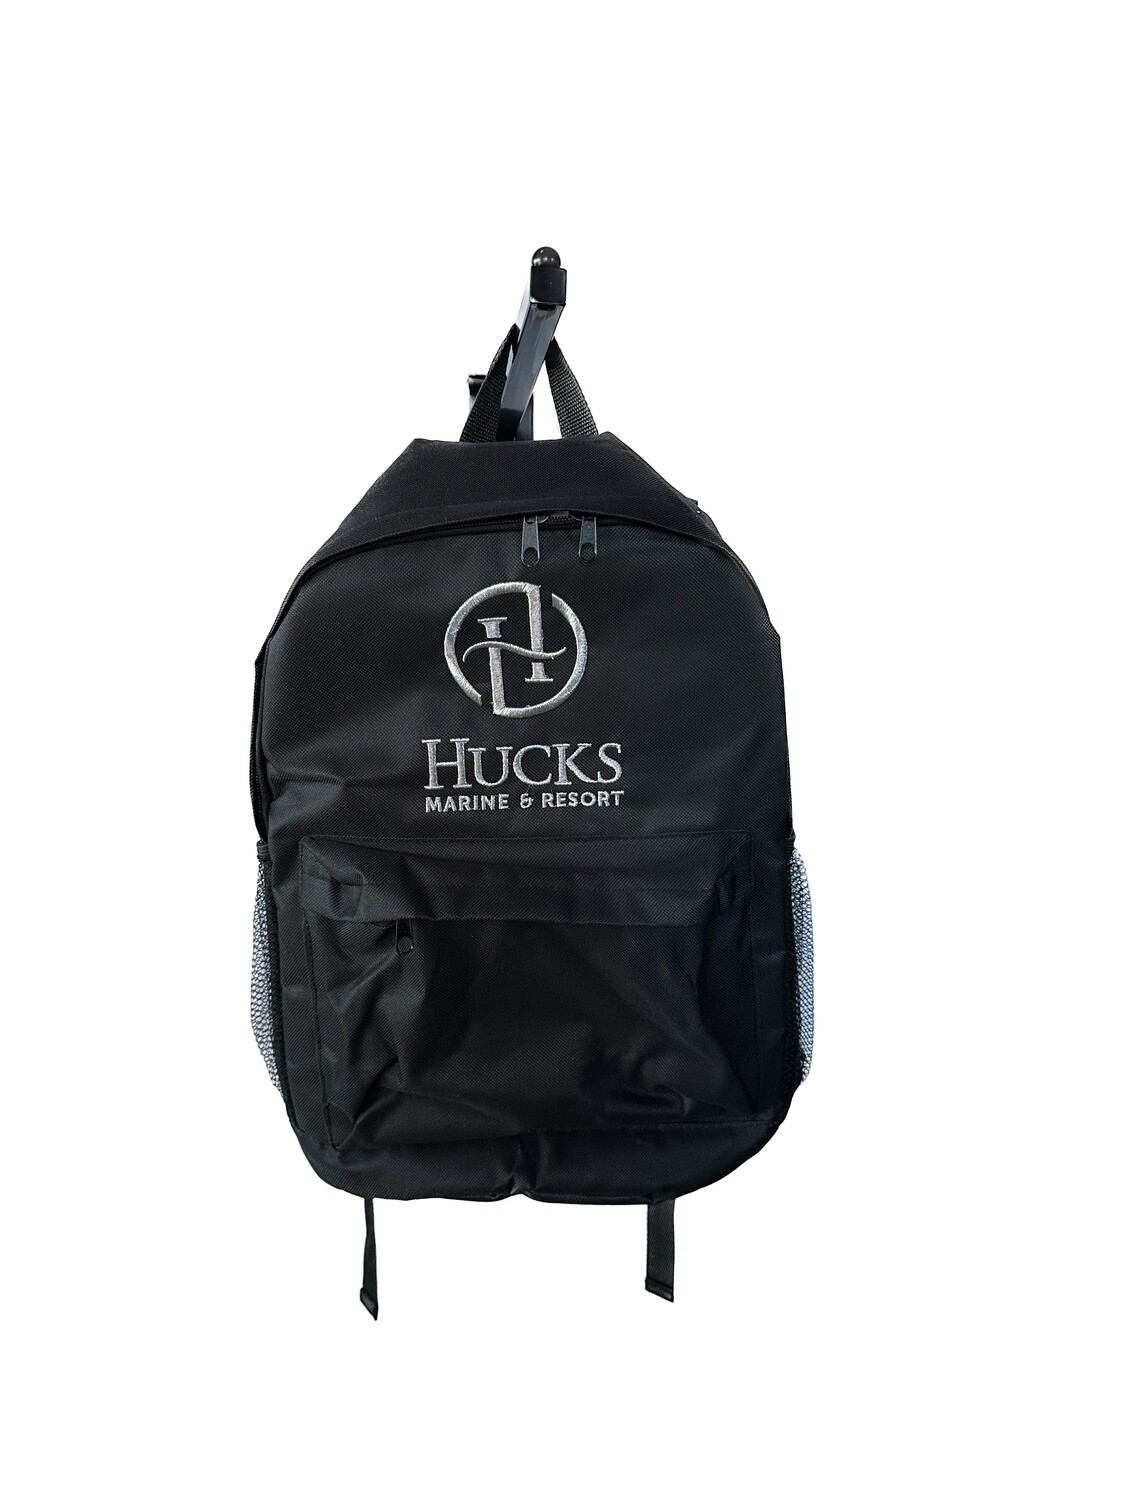 Hucks Insulated Back Pack